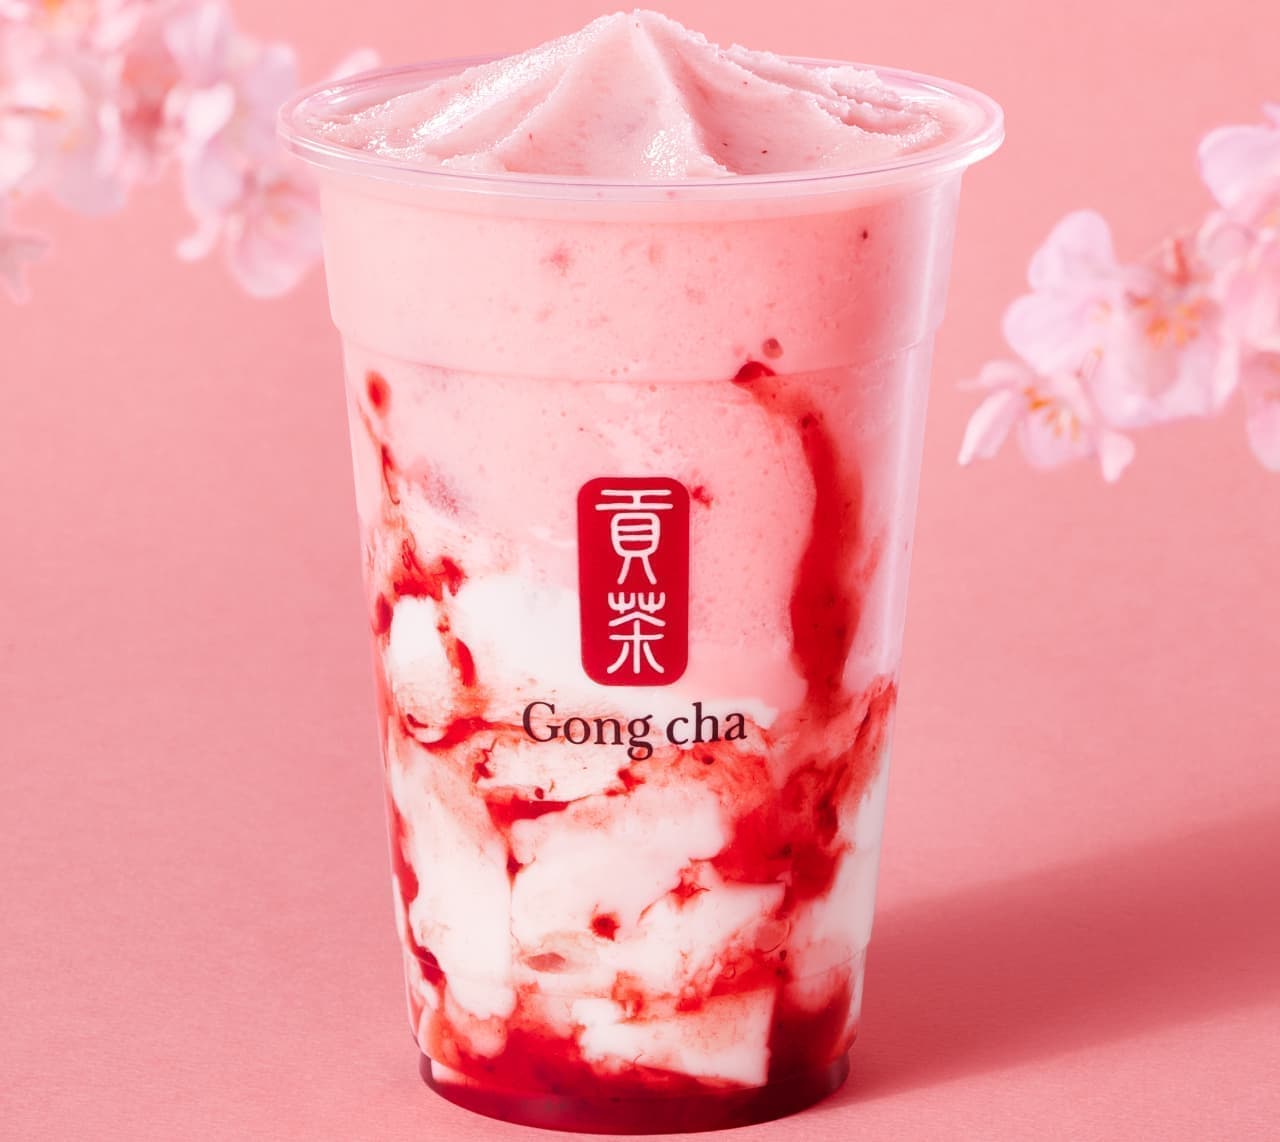 Gong Cha "Strawberry Apricot Frozen Tea".